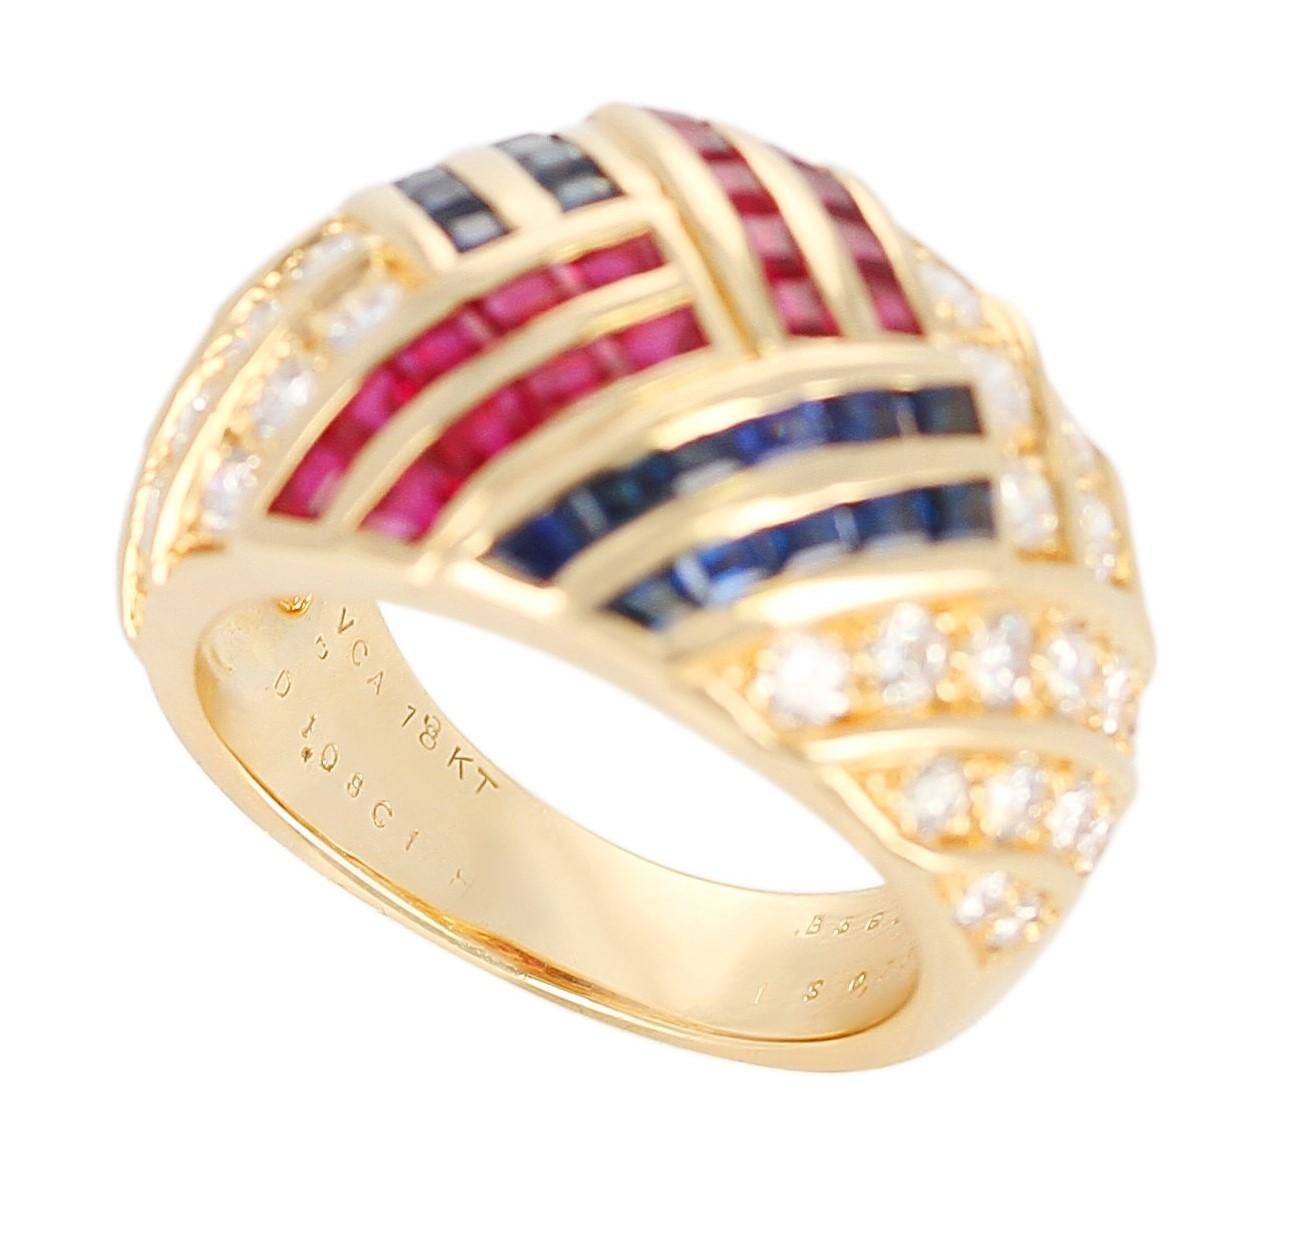 Women's or Men's Van Cleef & Arpels Ruby, Sapphire, and Diamond Cocktail Ring, 18 Karat Gold